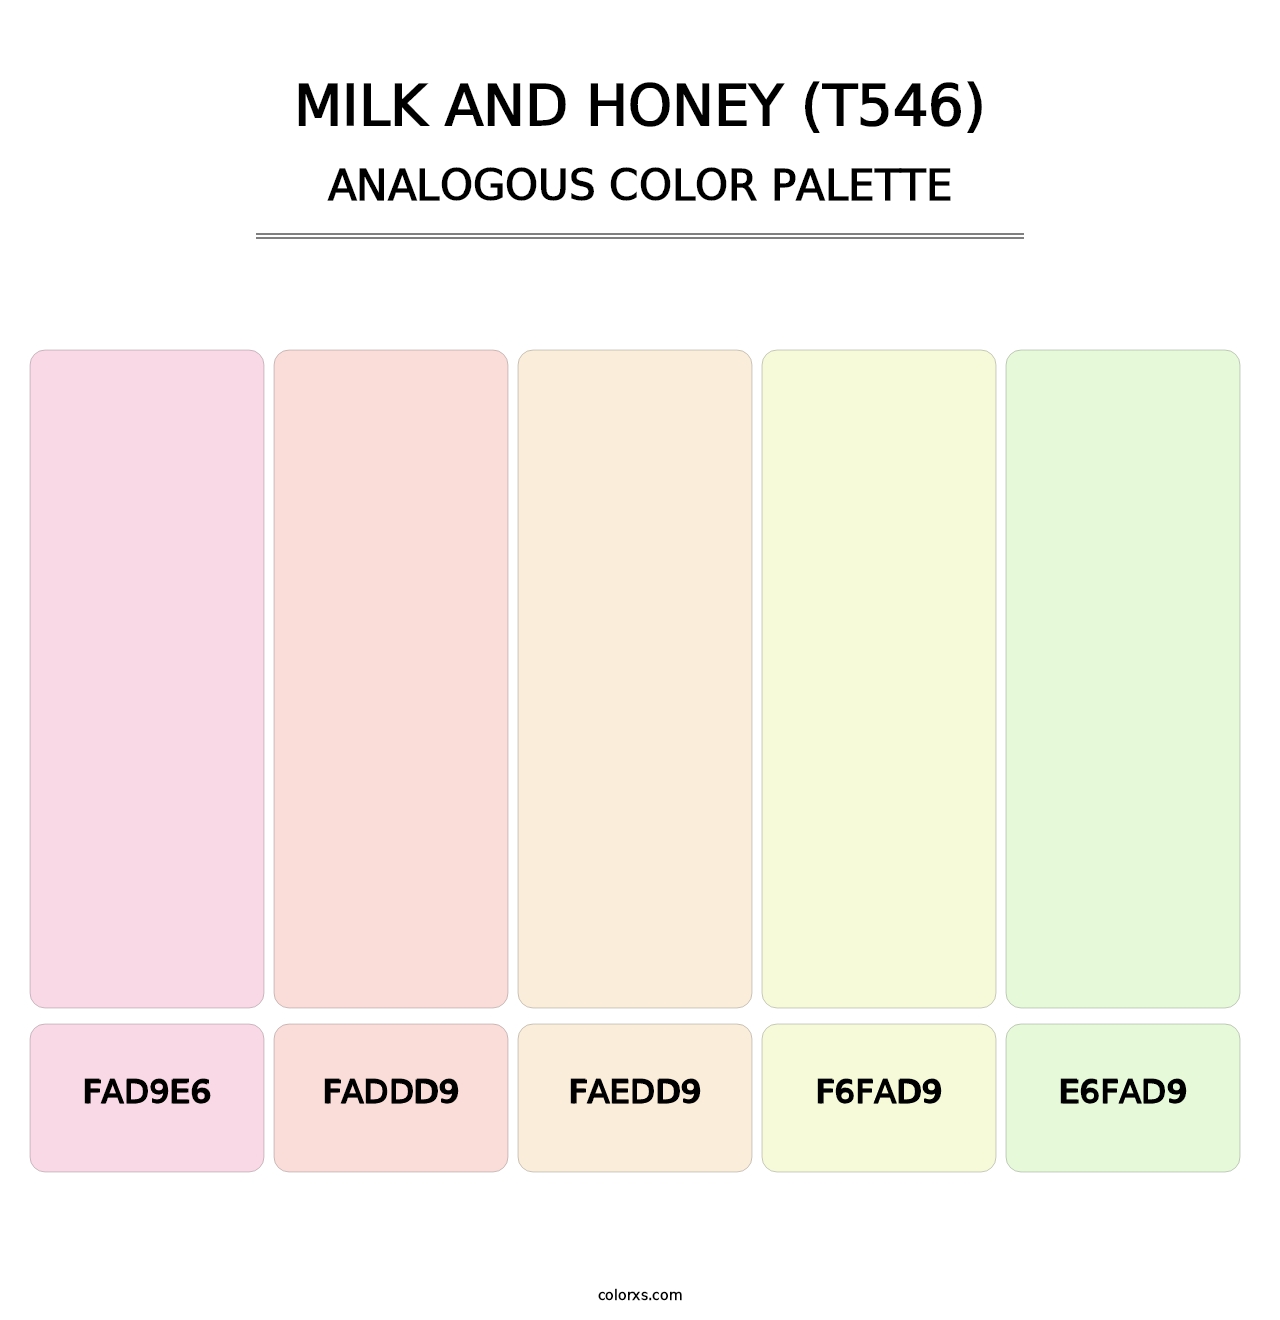 Milk and Honey (T546) - Analogous Color Palette